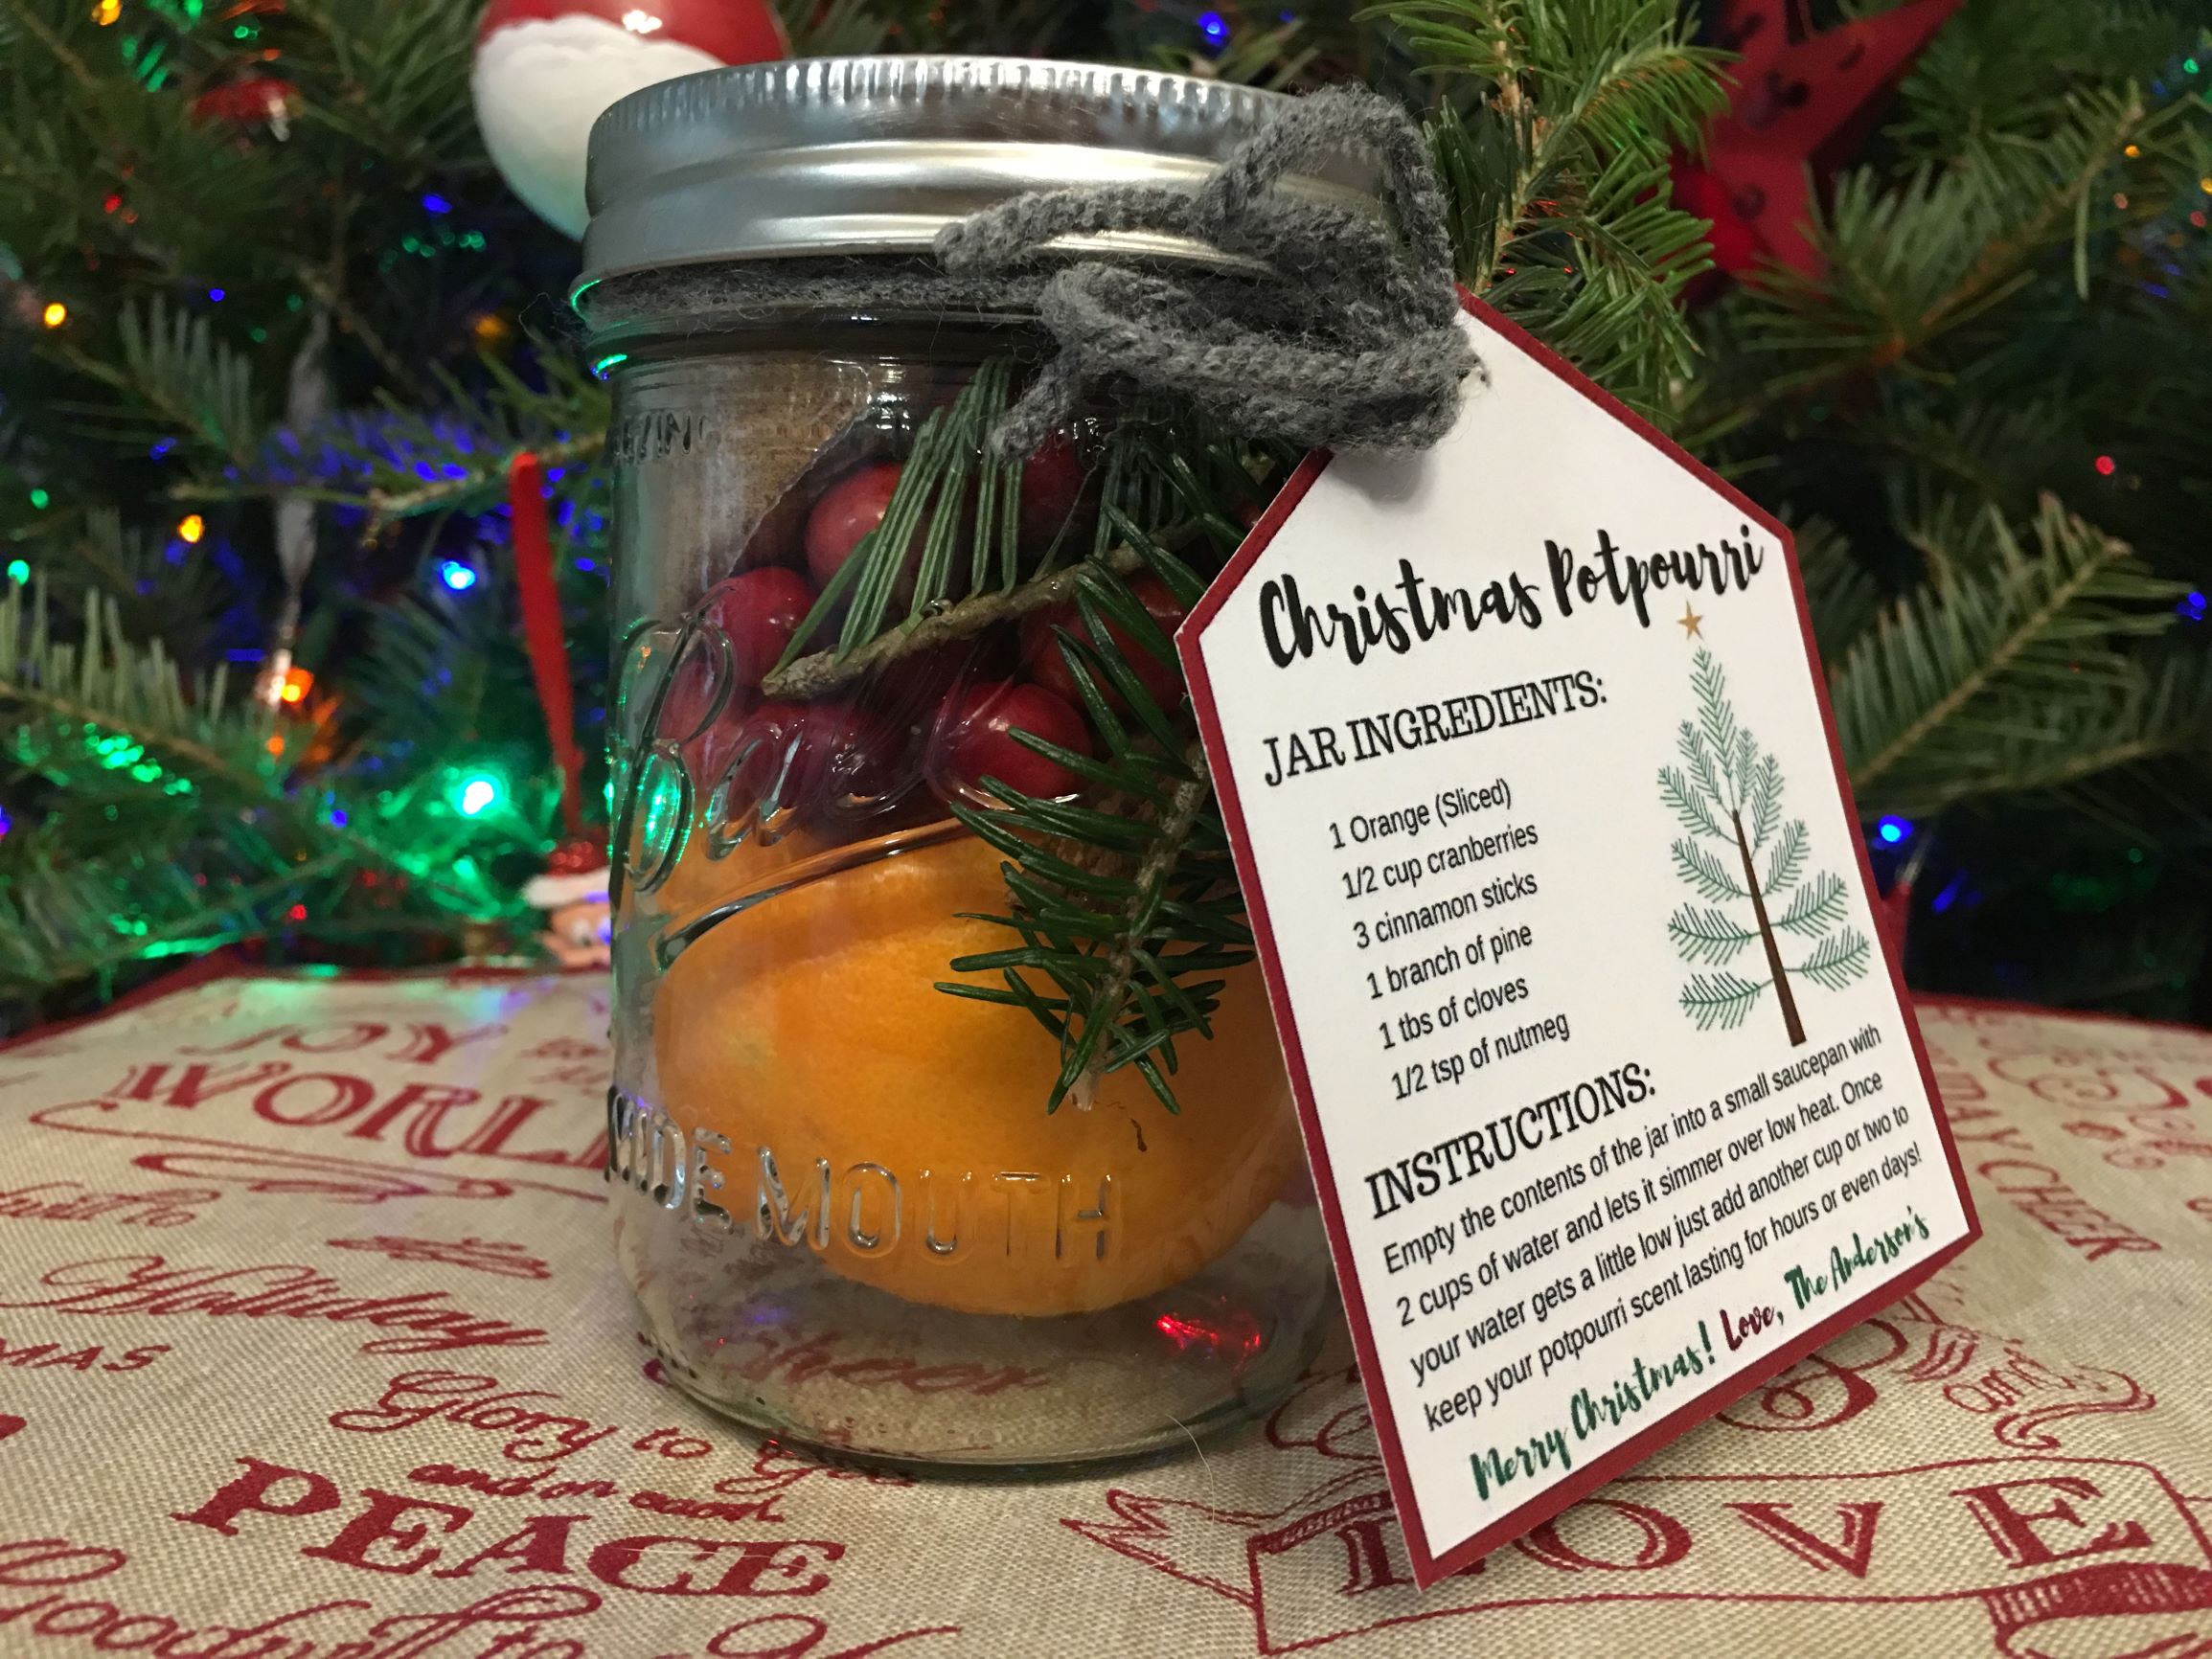 Easy Holiday Neighbor Gift Idea - Christmas Pot Simmer & Tag